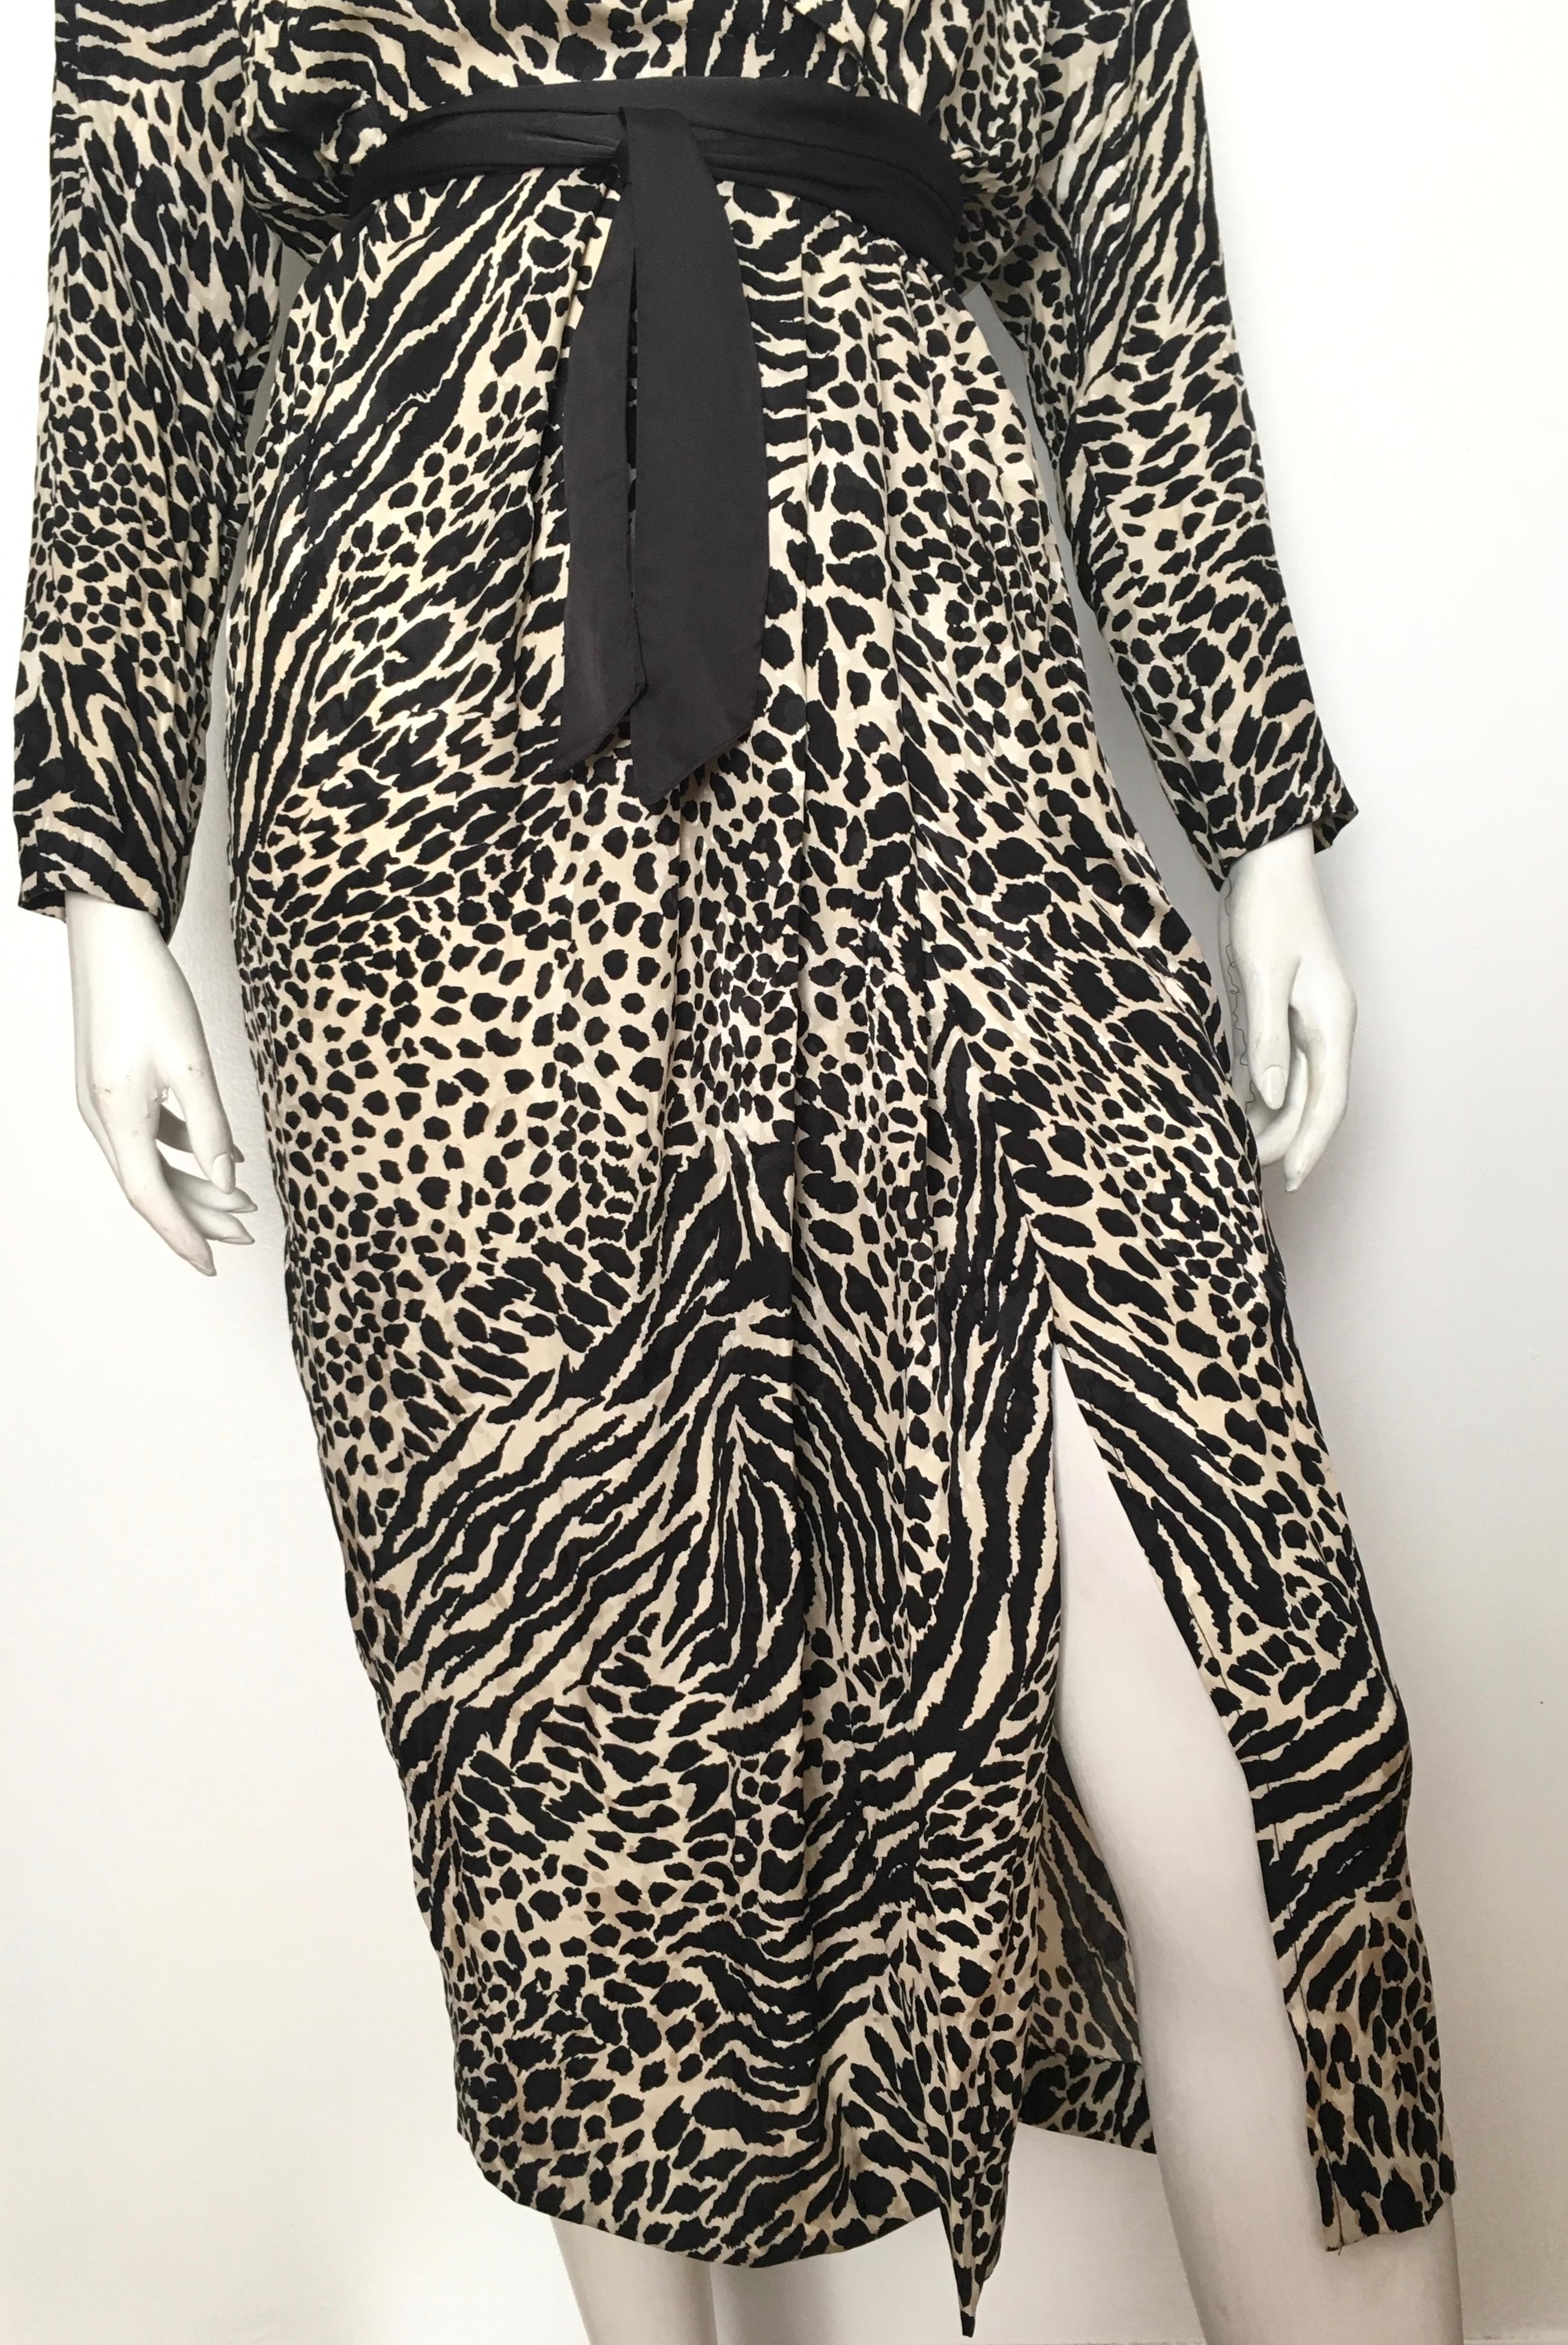 Black Geoffrey Beene for Lillie Rubin 1980 Animal Print Silk Dress Size 6. For Sale